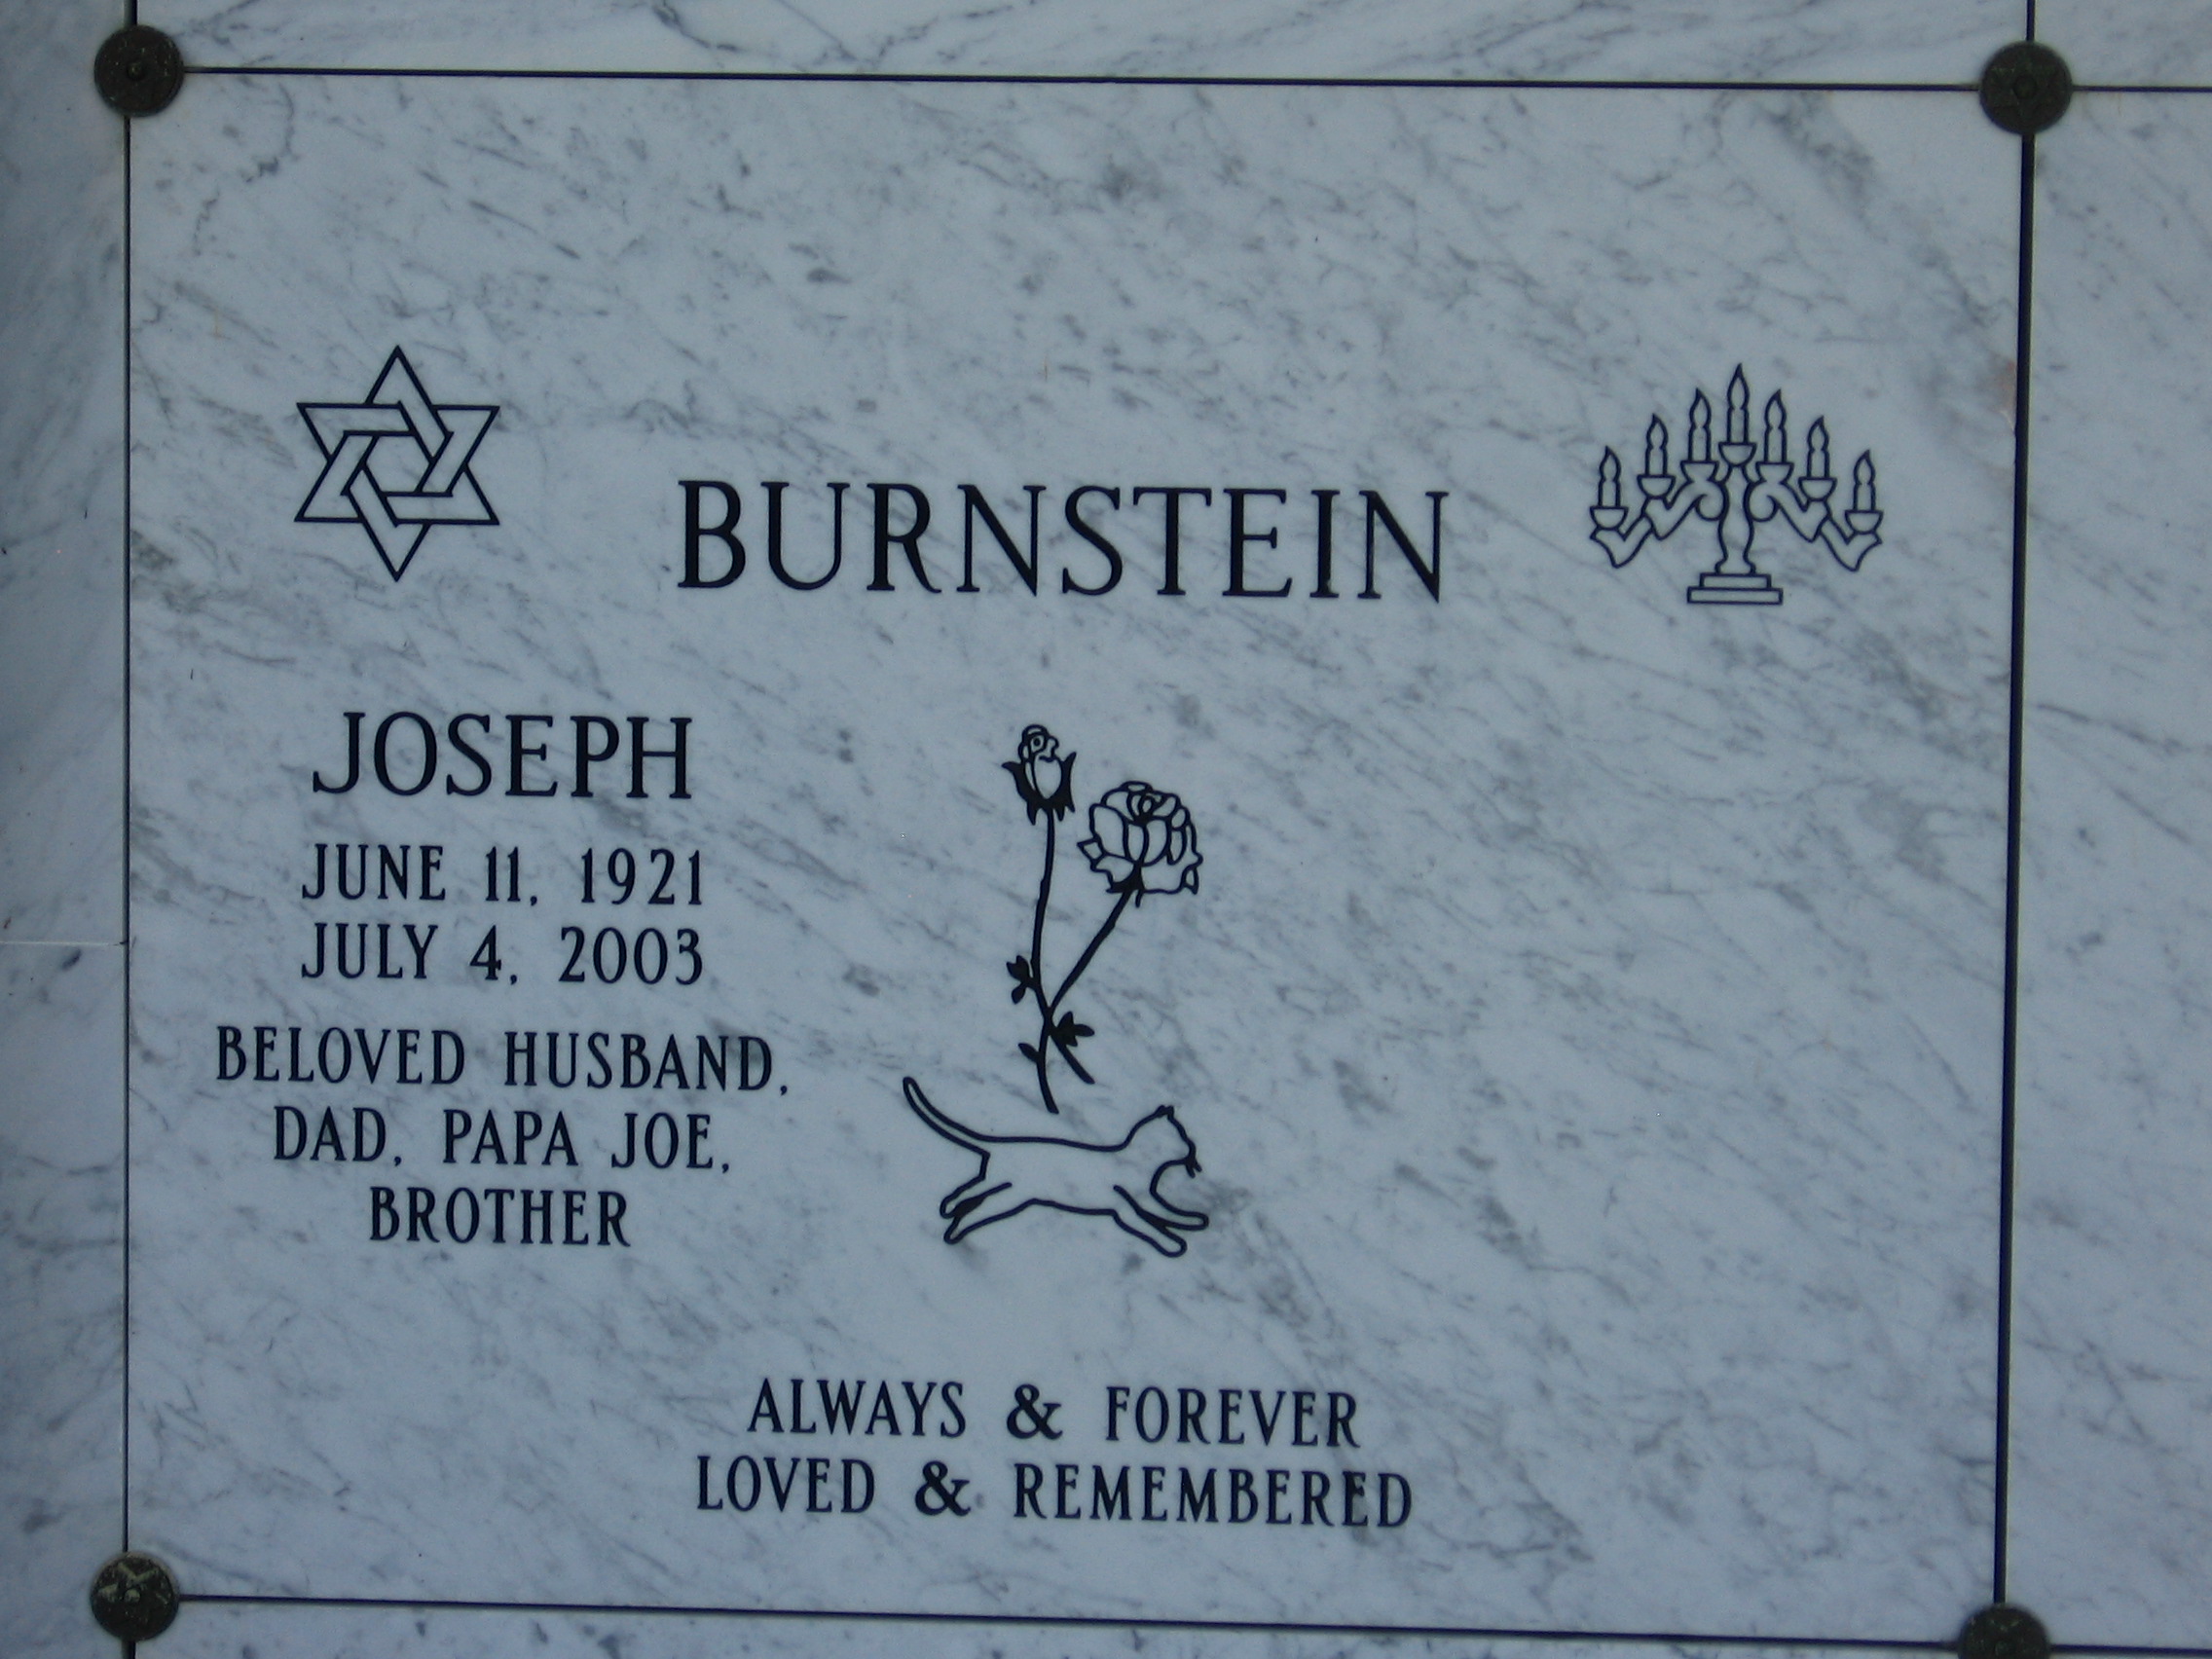 Joseph Burnstein